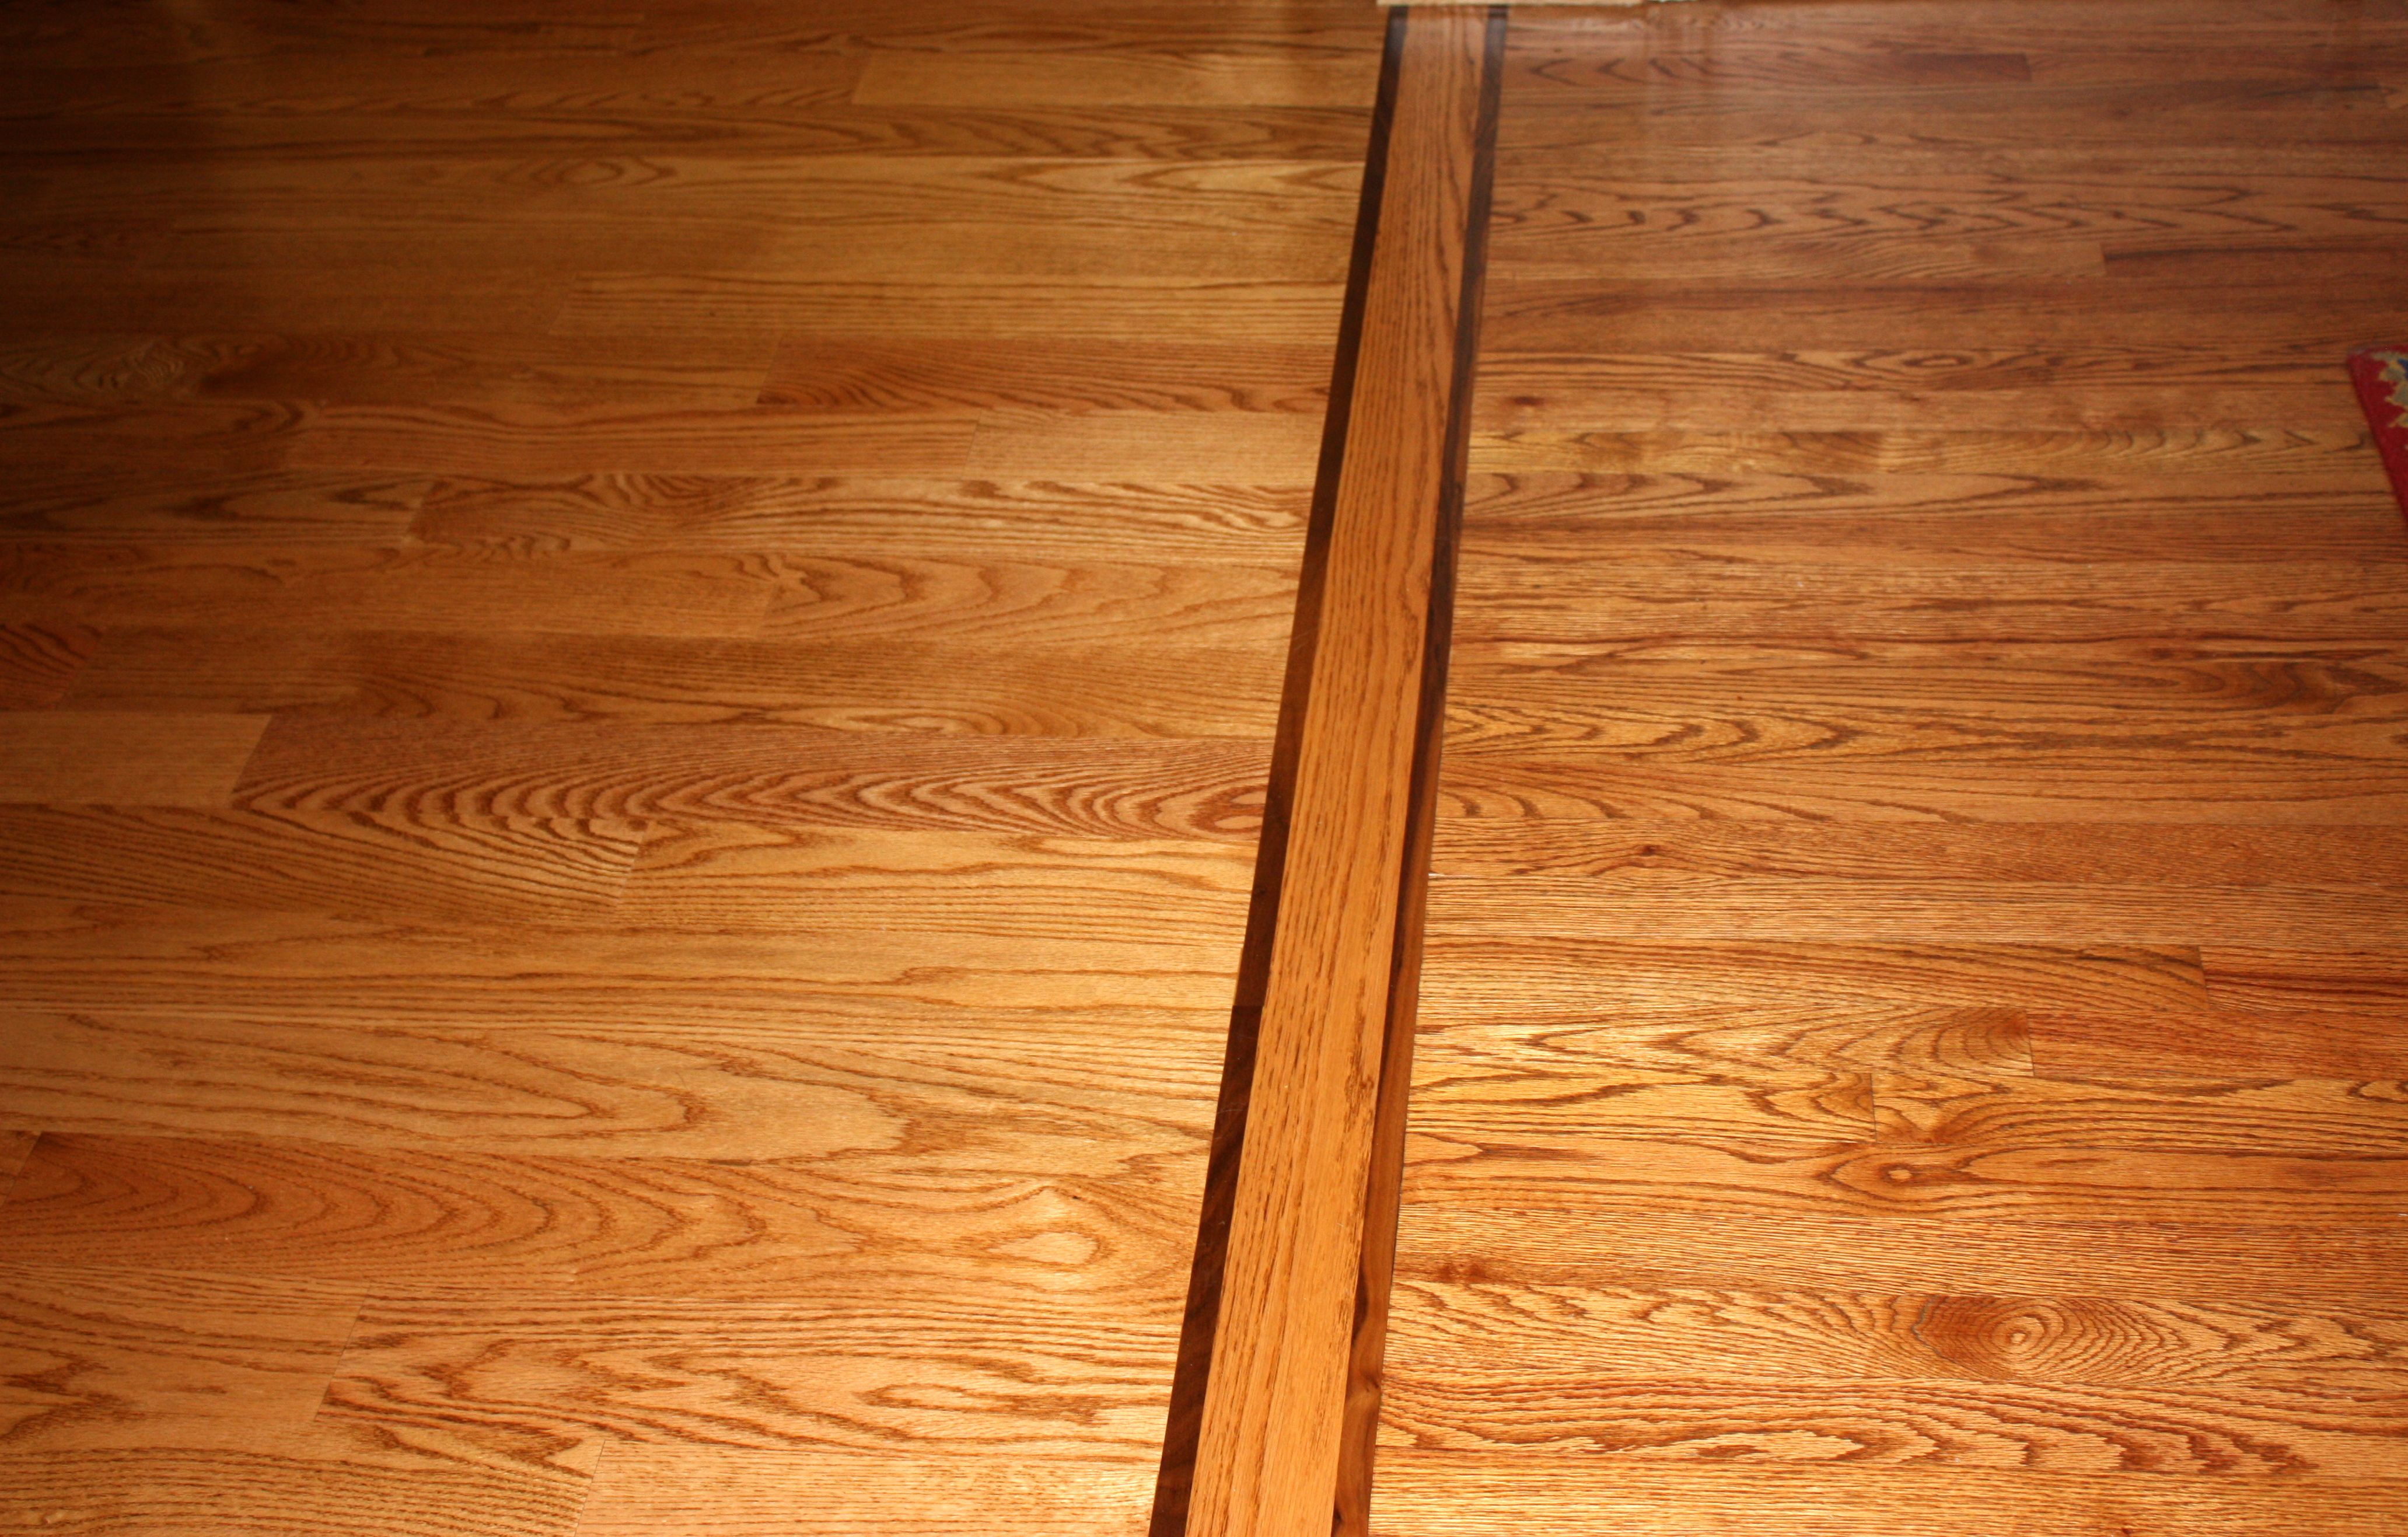 Matching An Existing Hardwood Floor, Hardwood Floor Transition